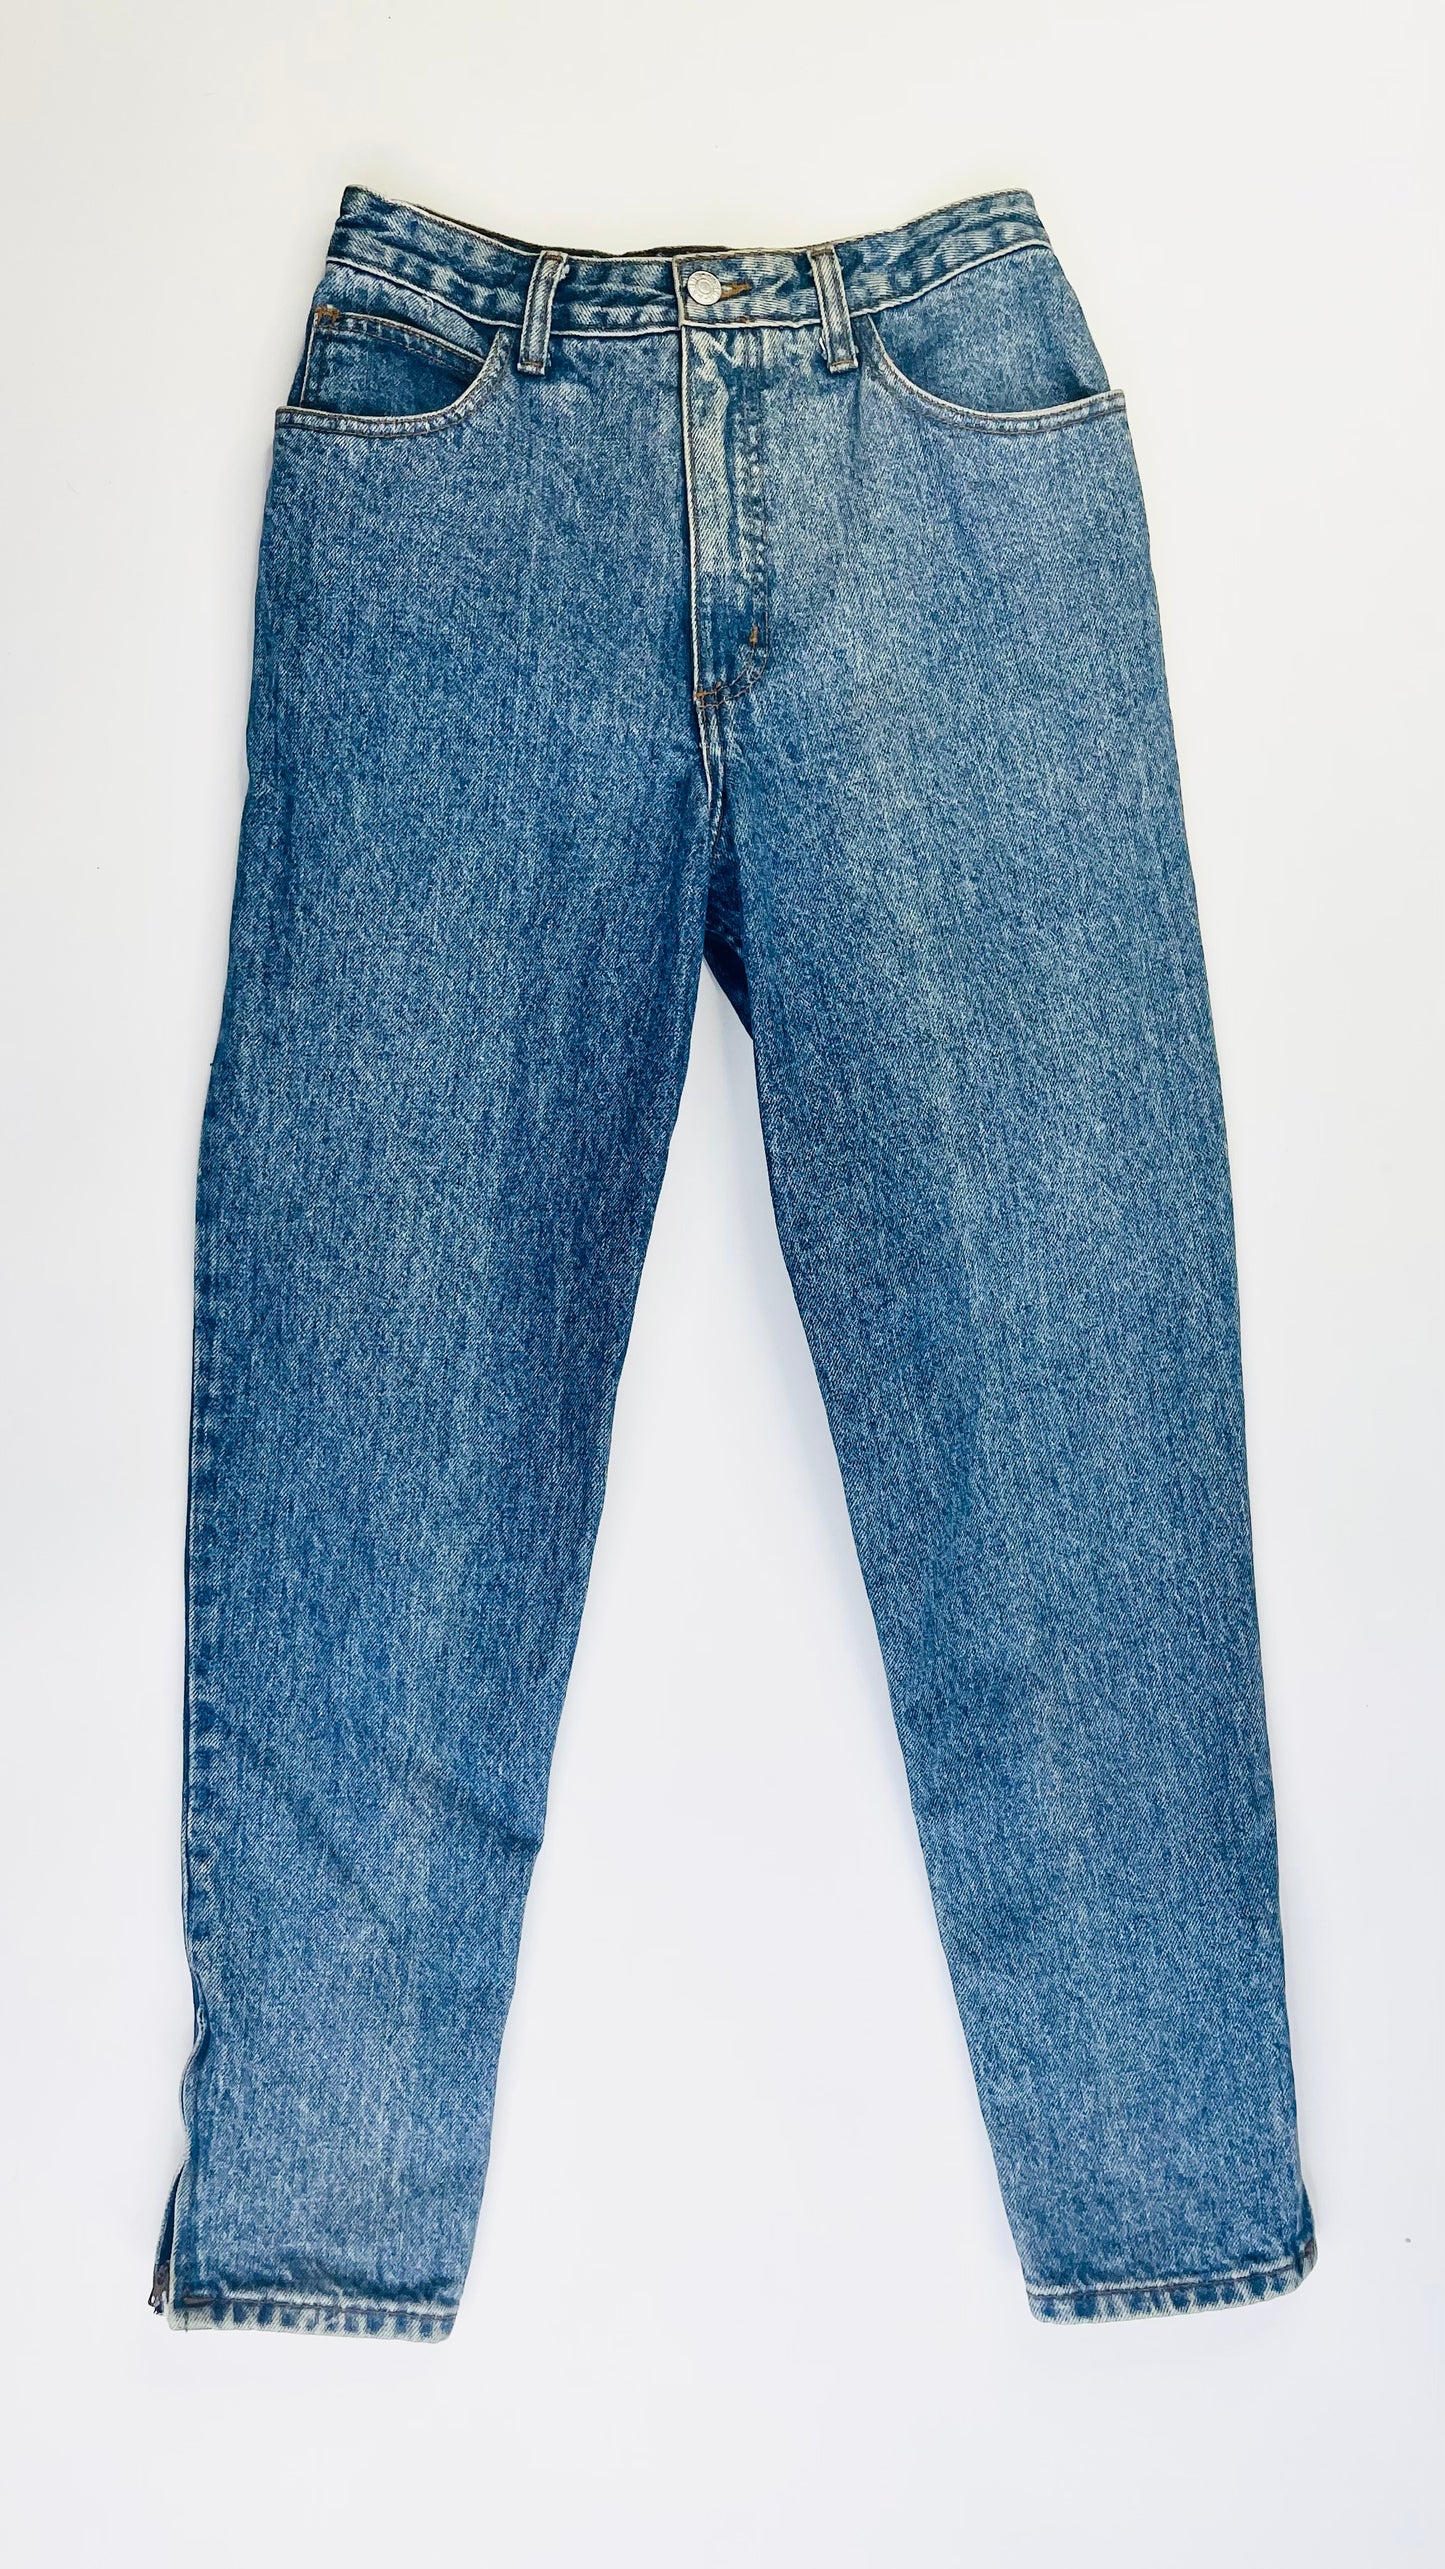 Vintage 90s GUESS mid blue high rise slim cut jeans - Size 27